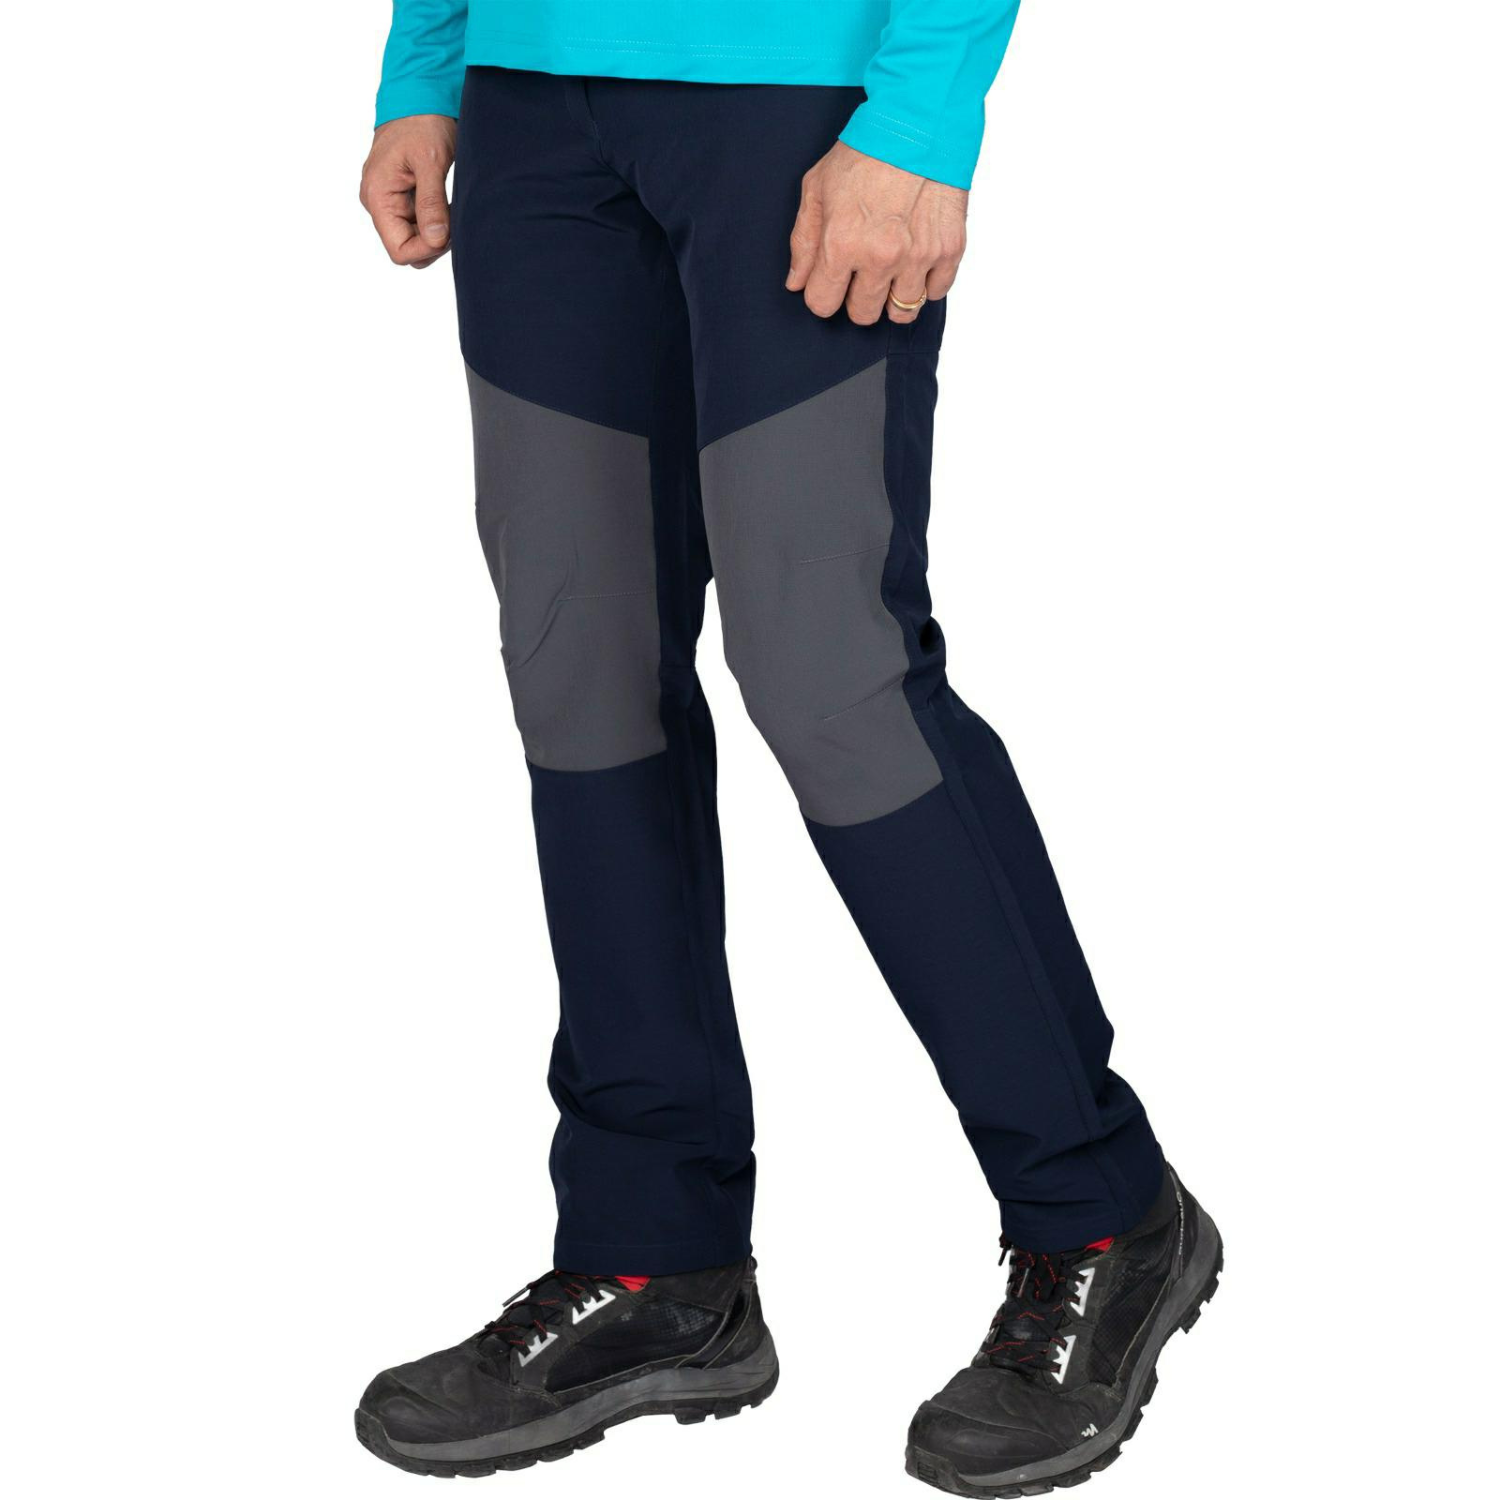 Buy Gokyo Kaza All Weather Trekking Pants | Trekking & Hiking Pants at Gokyo Outdoor Clothing & Gear